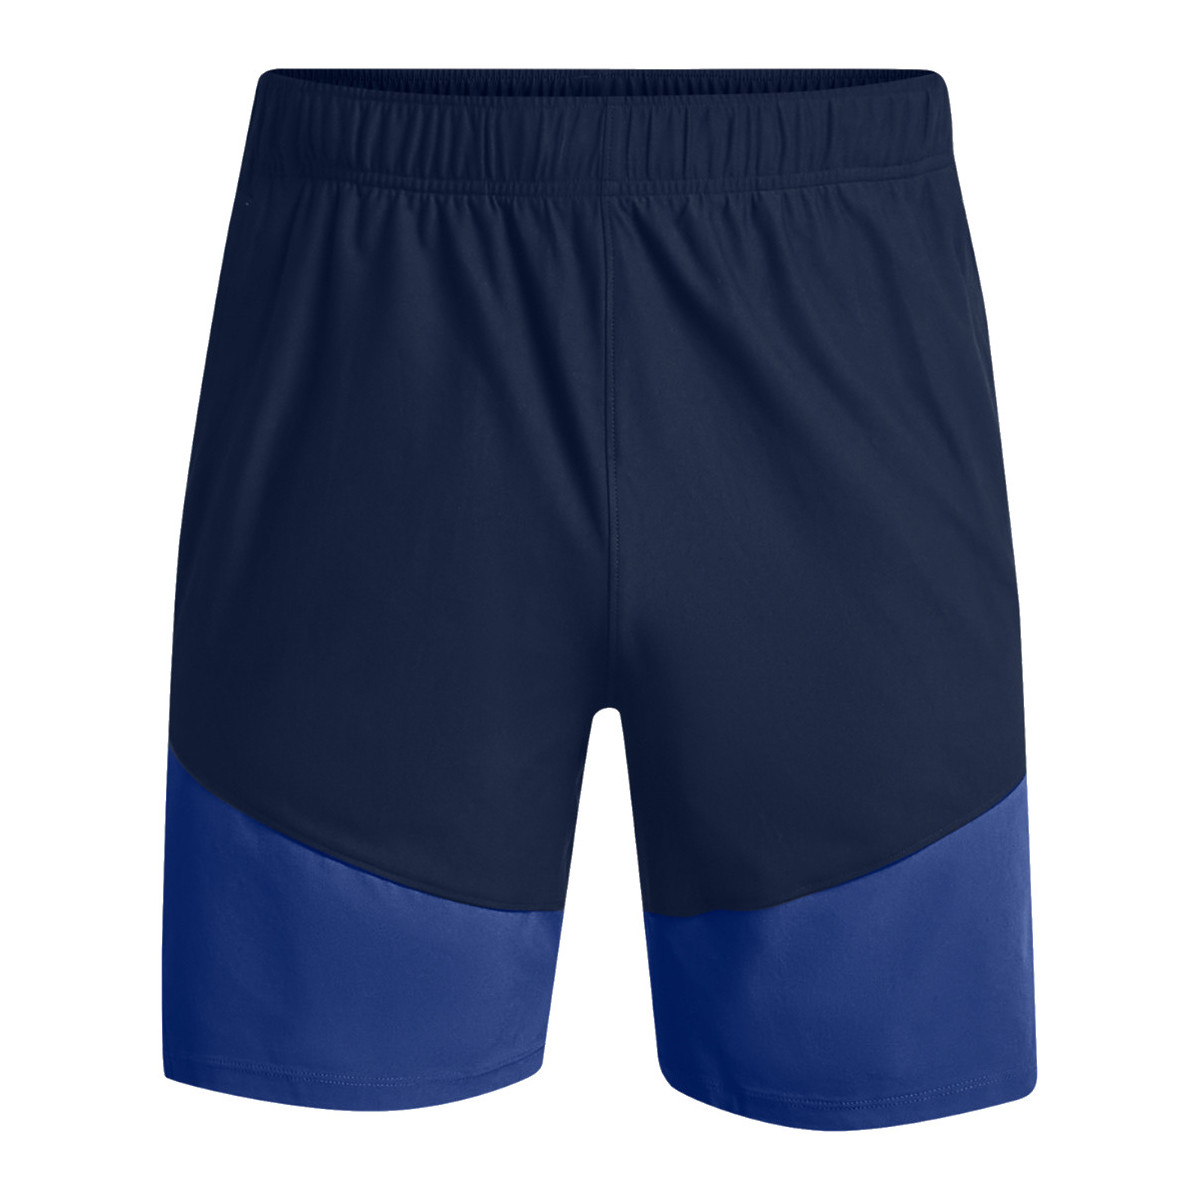 Textil Homem Calças curtas Under Armour Knit Woven Hybrid Shorts Azul